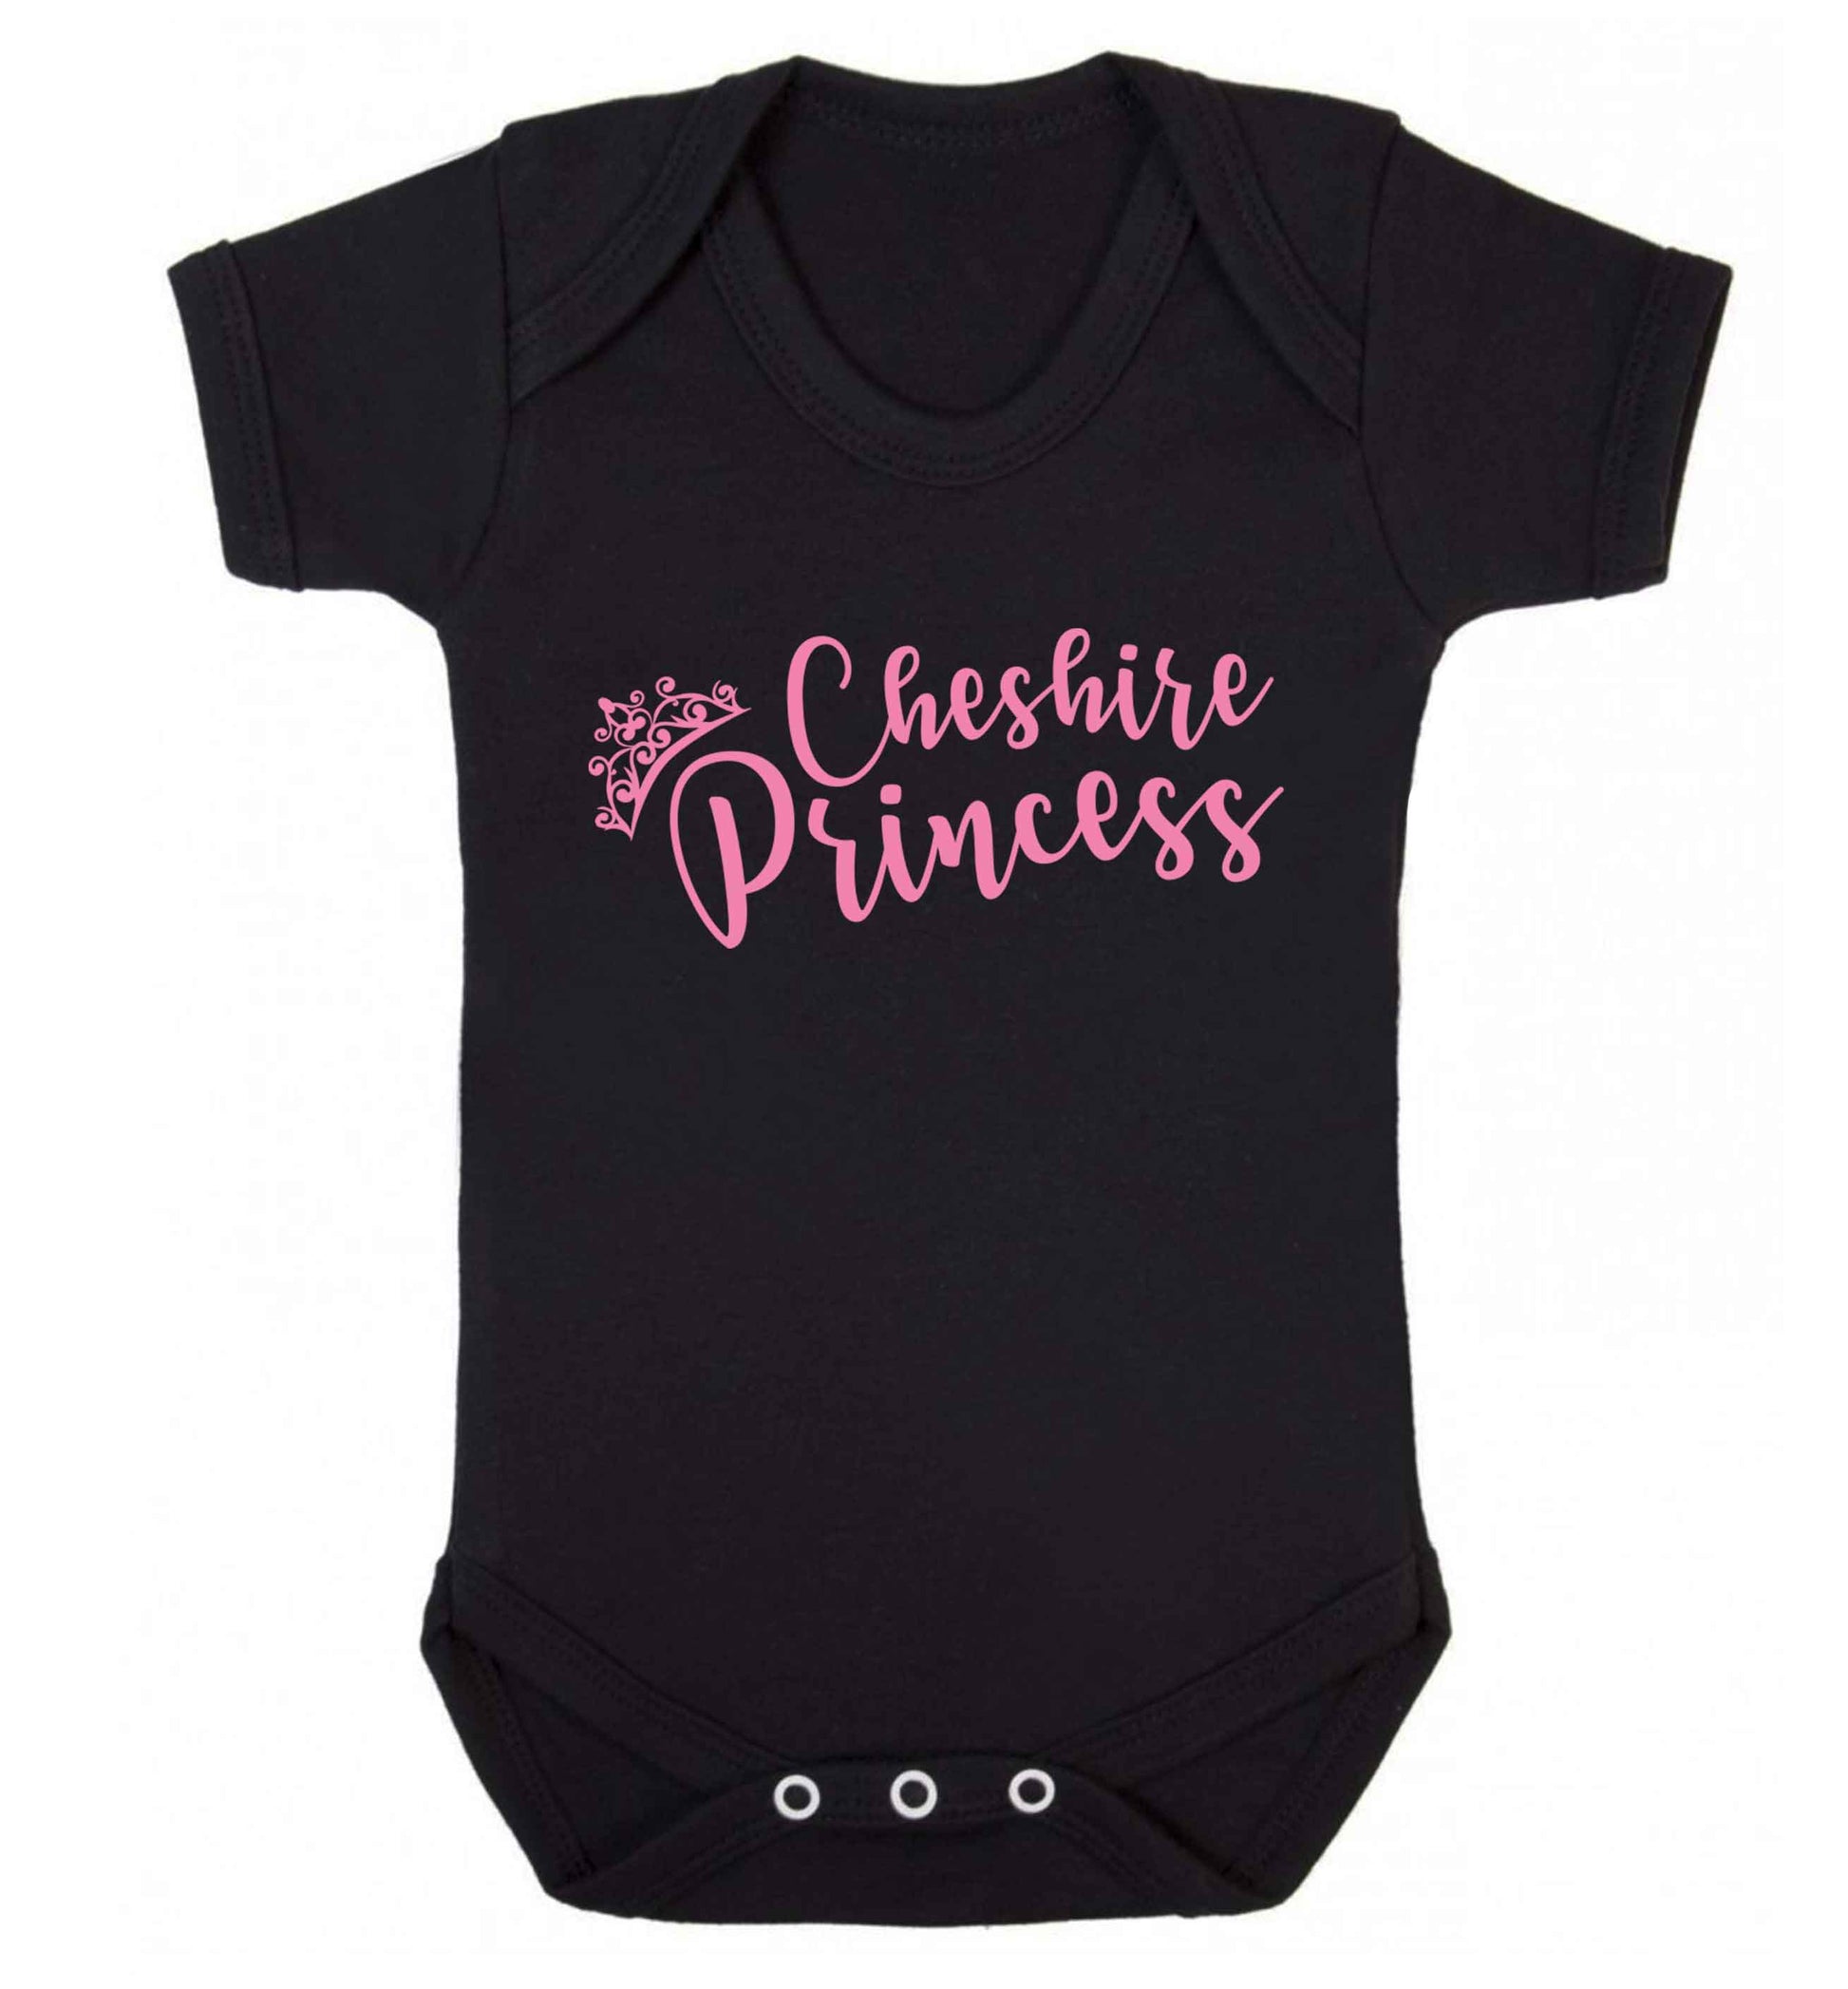 Cheshire princess Baby Vest black 18-24 months